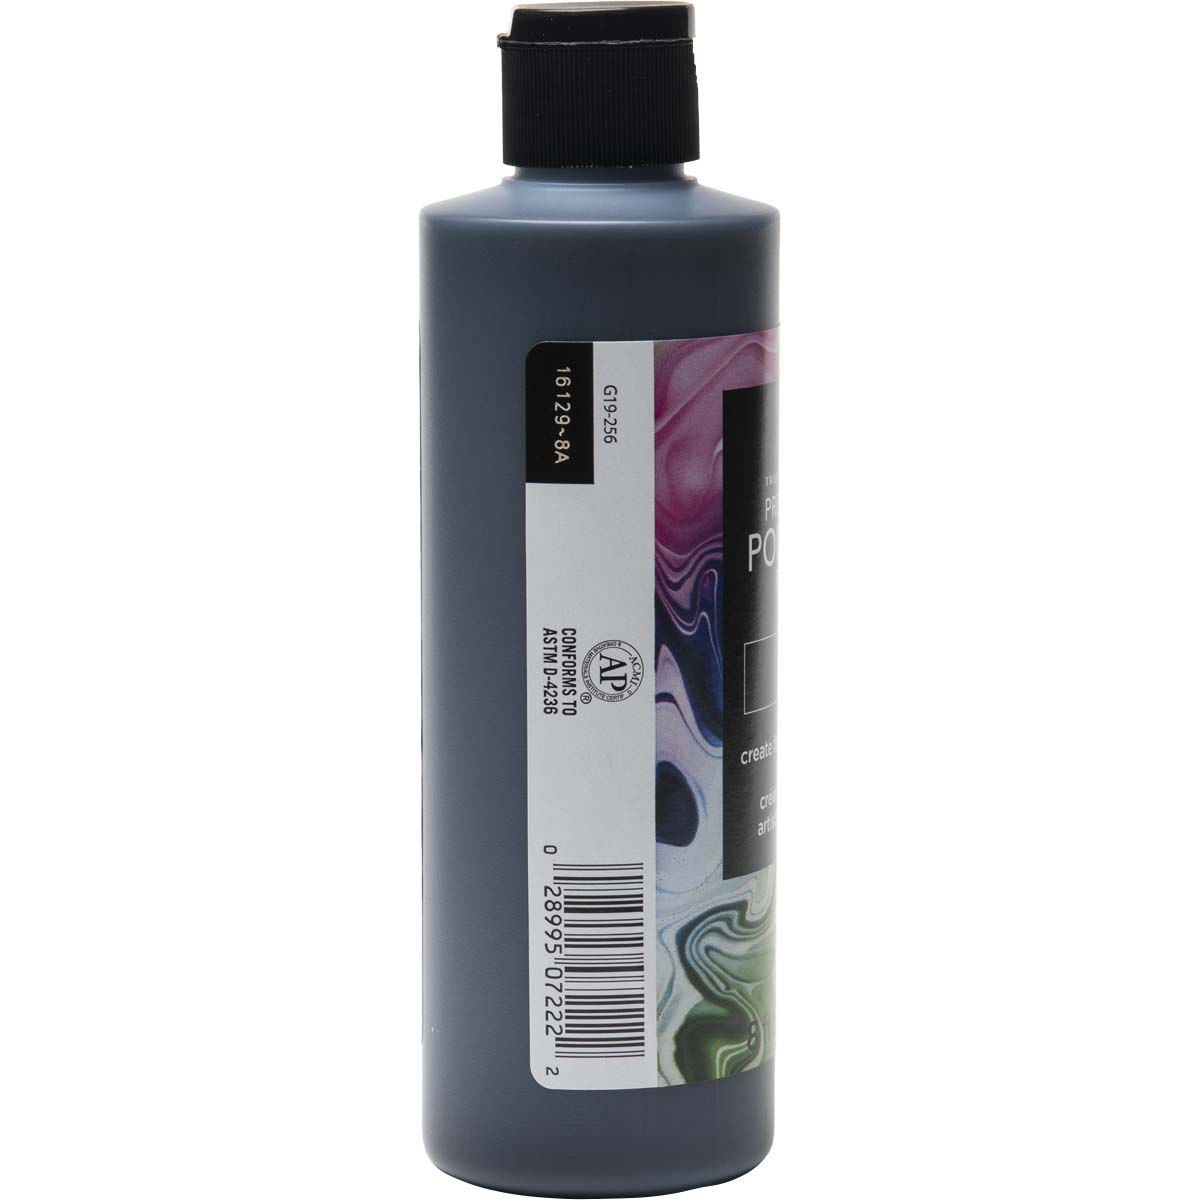 FolkArt ® Pre-mixed Pouring Paint - Black, 8 oz. - 7222